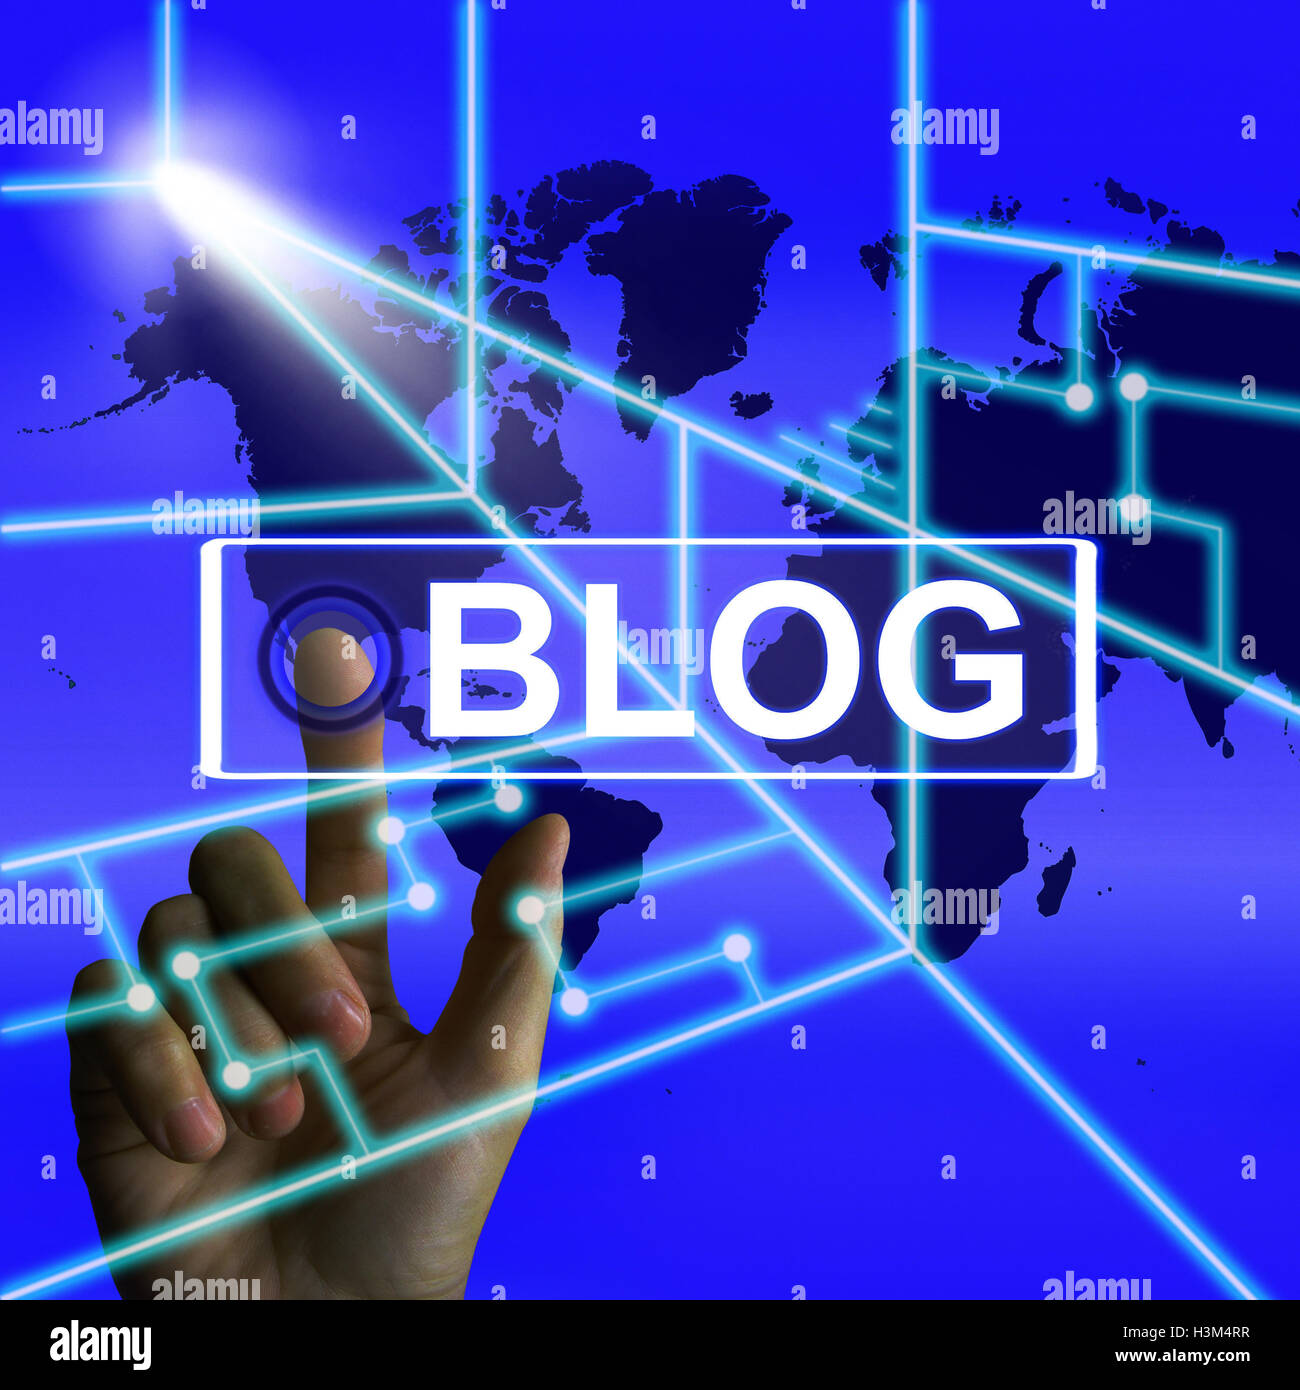 Blog Screen Shows International or Worldwide Blogging Stock Photo